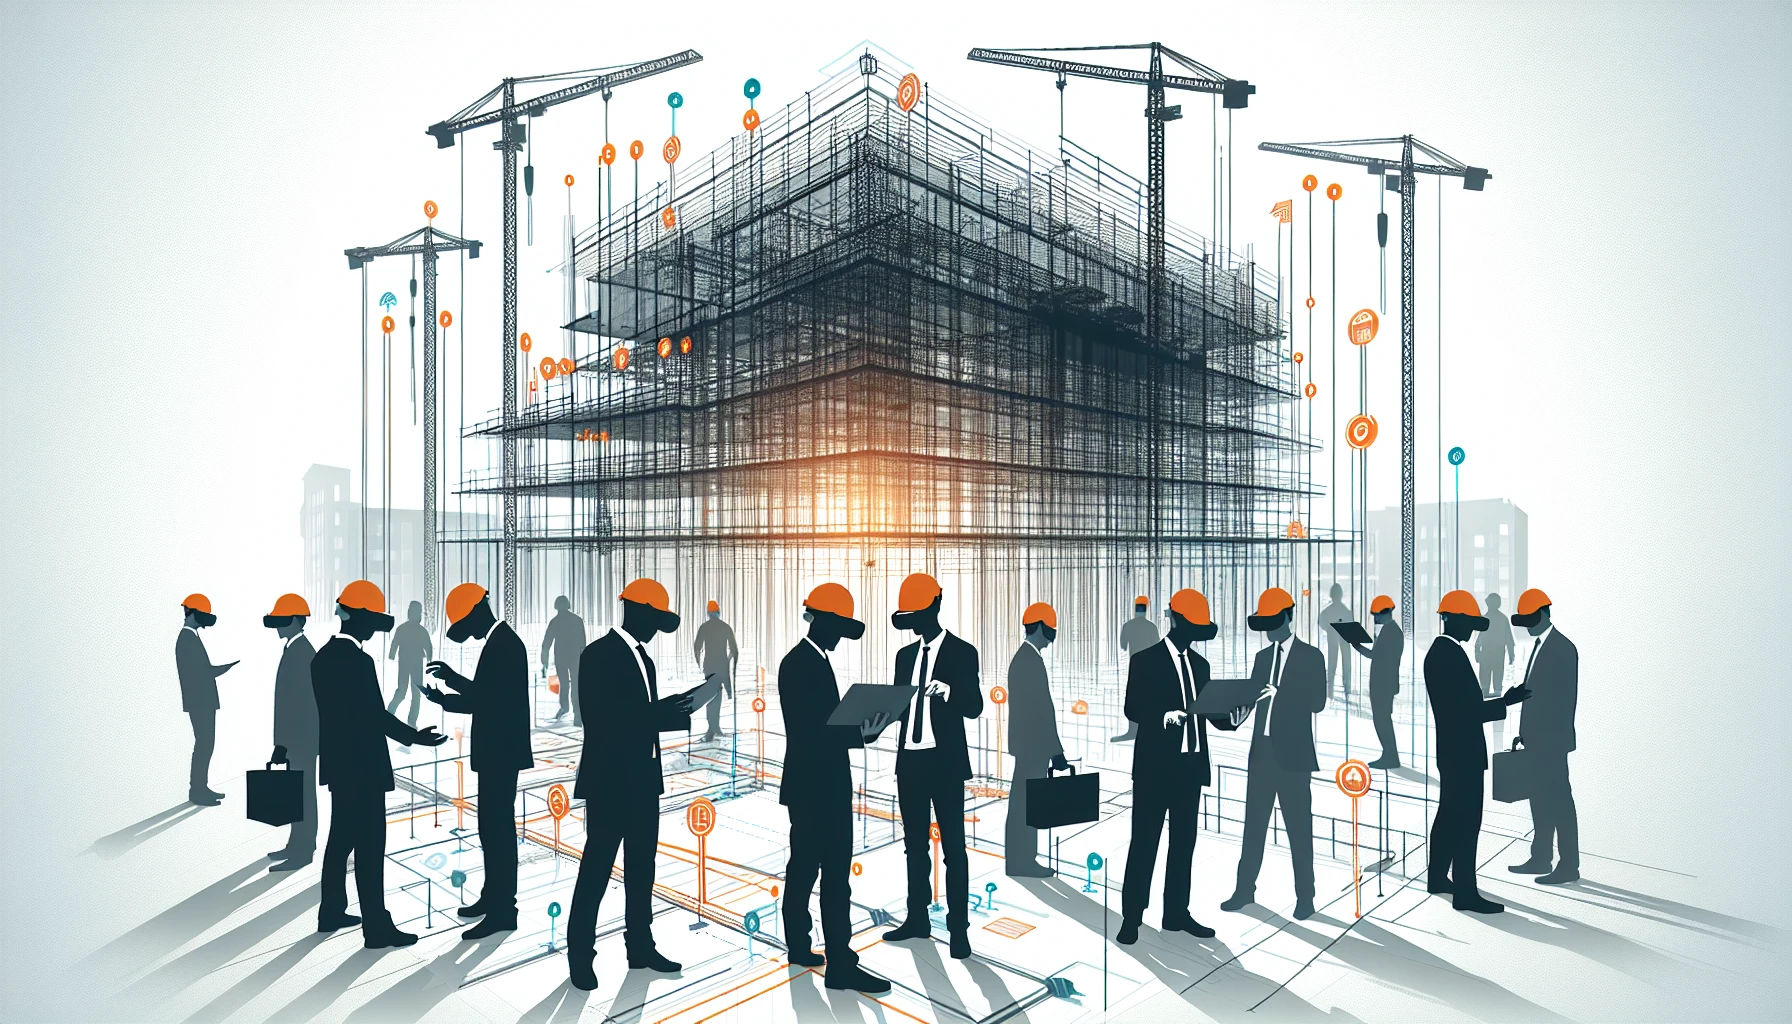 BIM and construction management virtual reality simulation